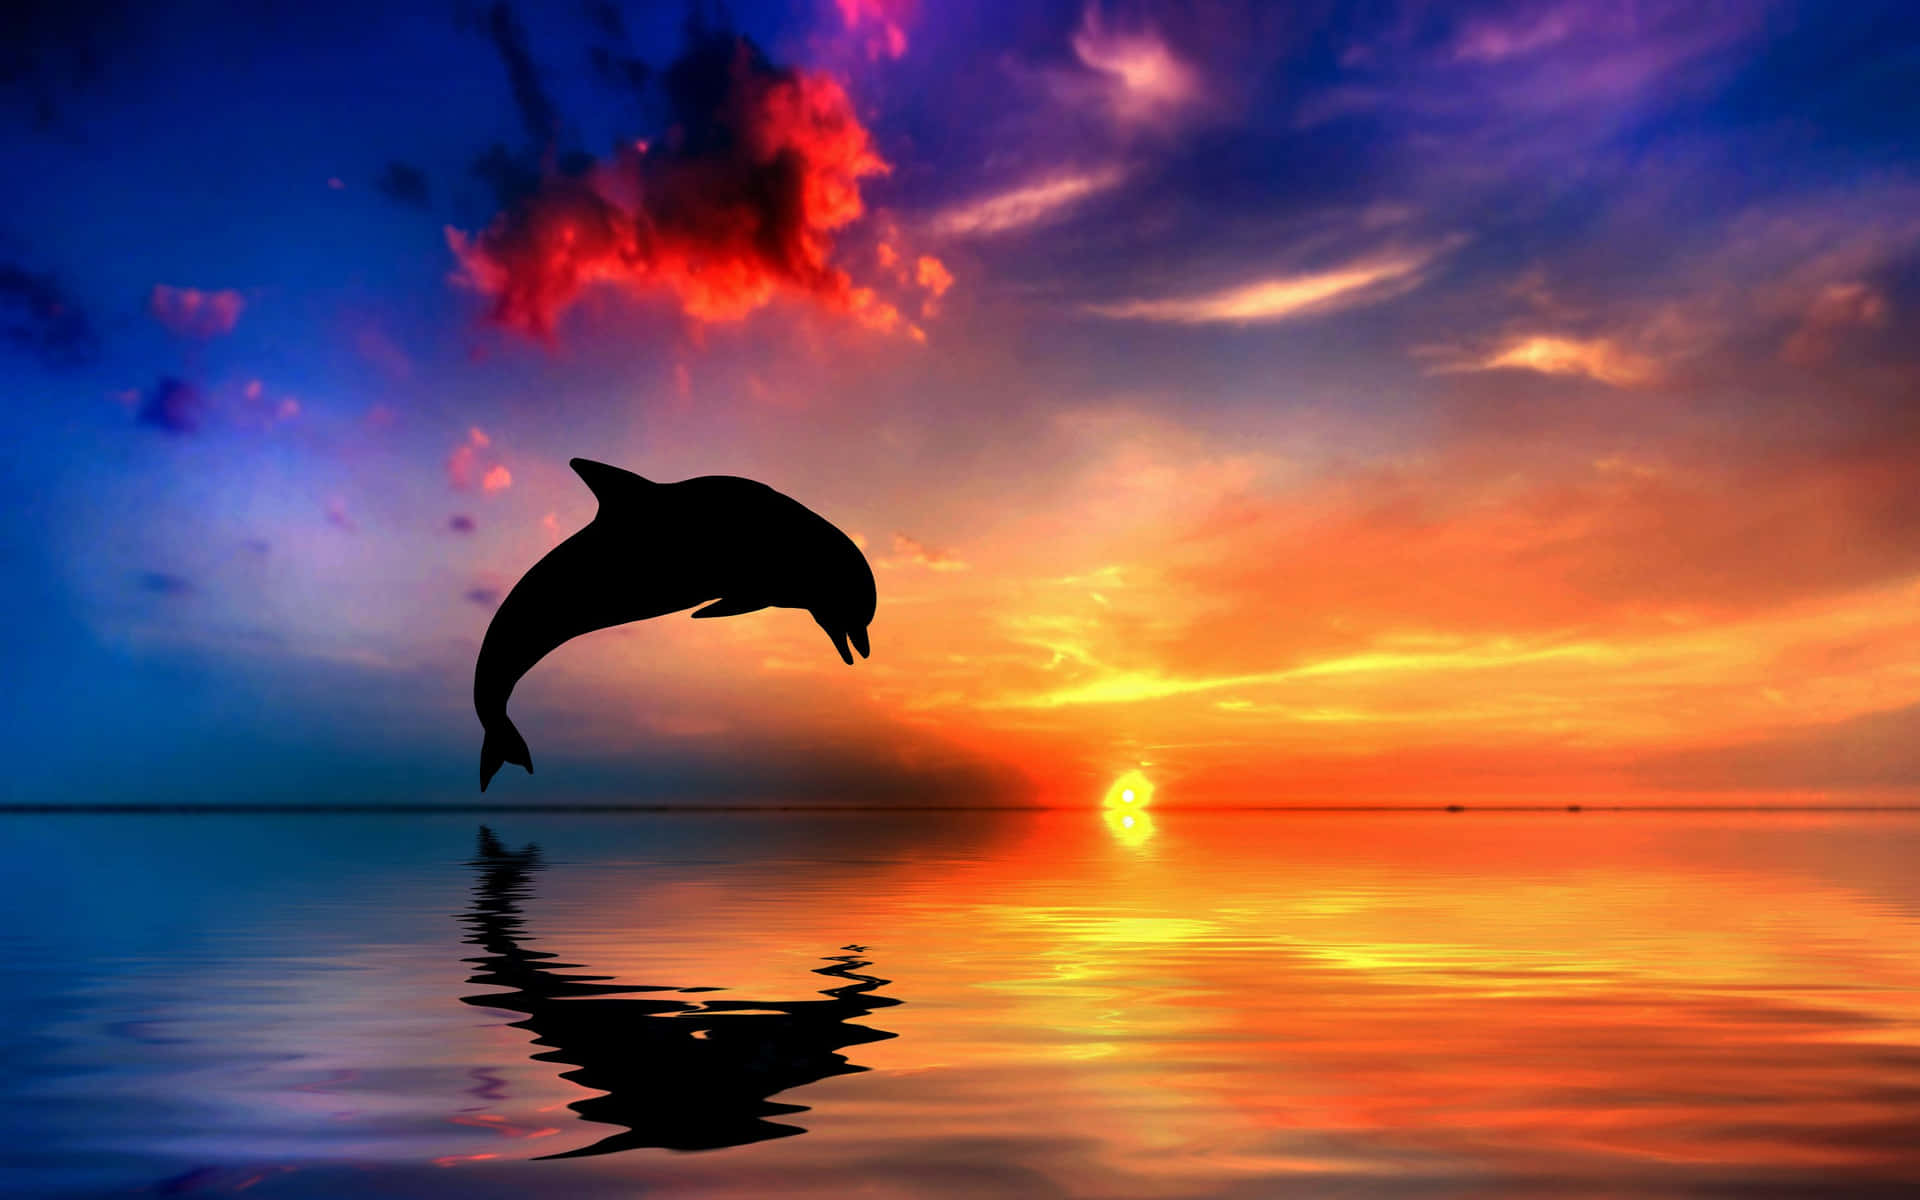 Etsmukt Solnedgangs Billede, Hvor Solen Skinner På Havets Overflade Og En Nysgerrig Delfin Er I Forgrunden. Wallpaper